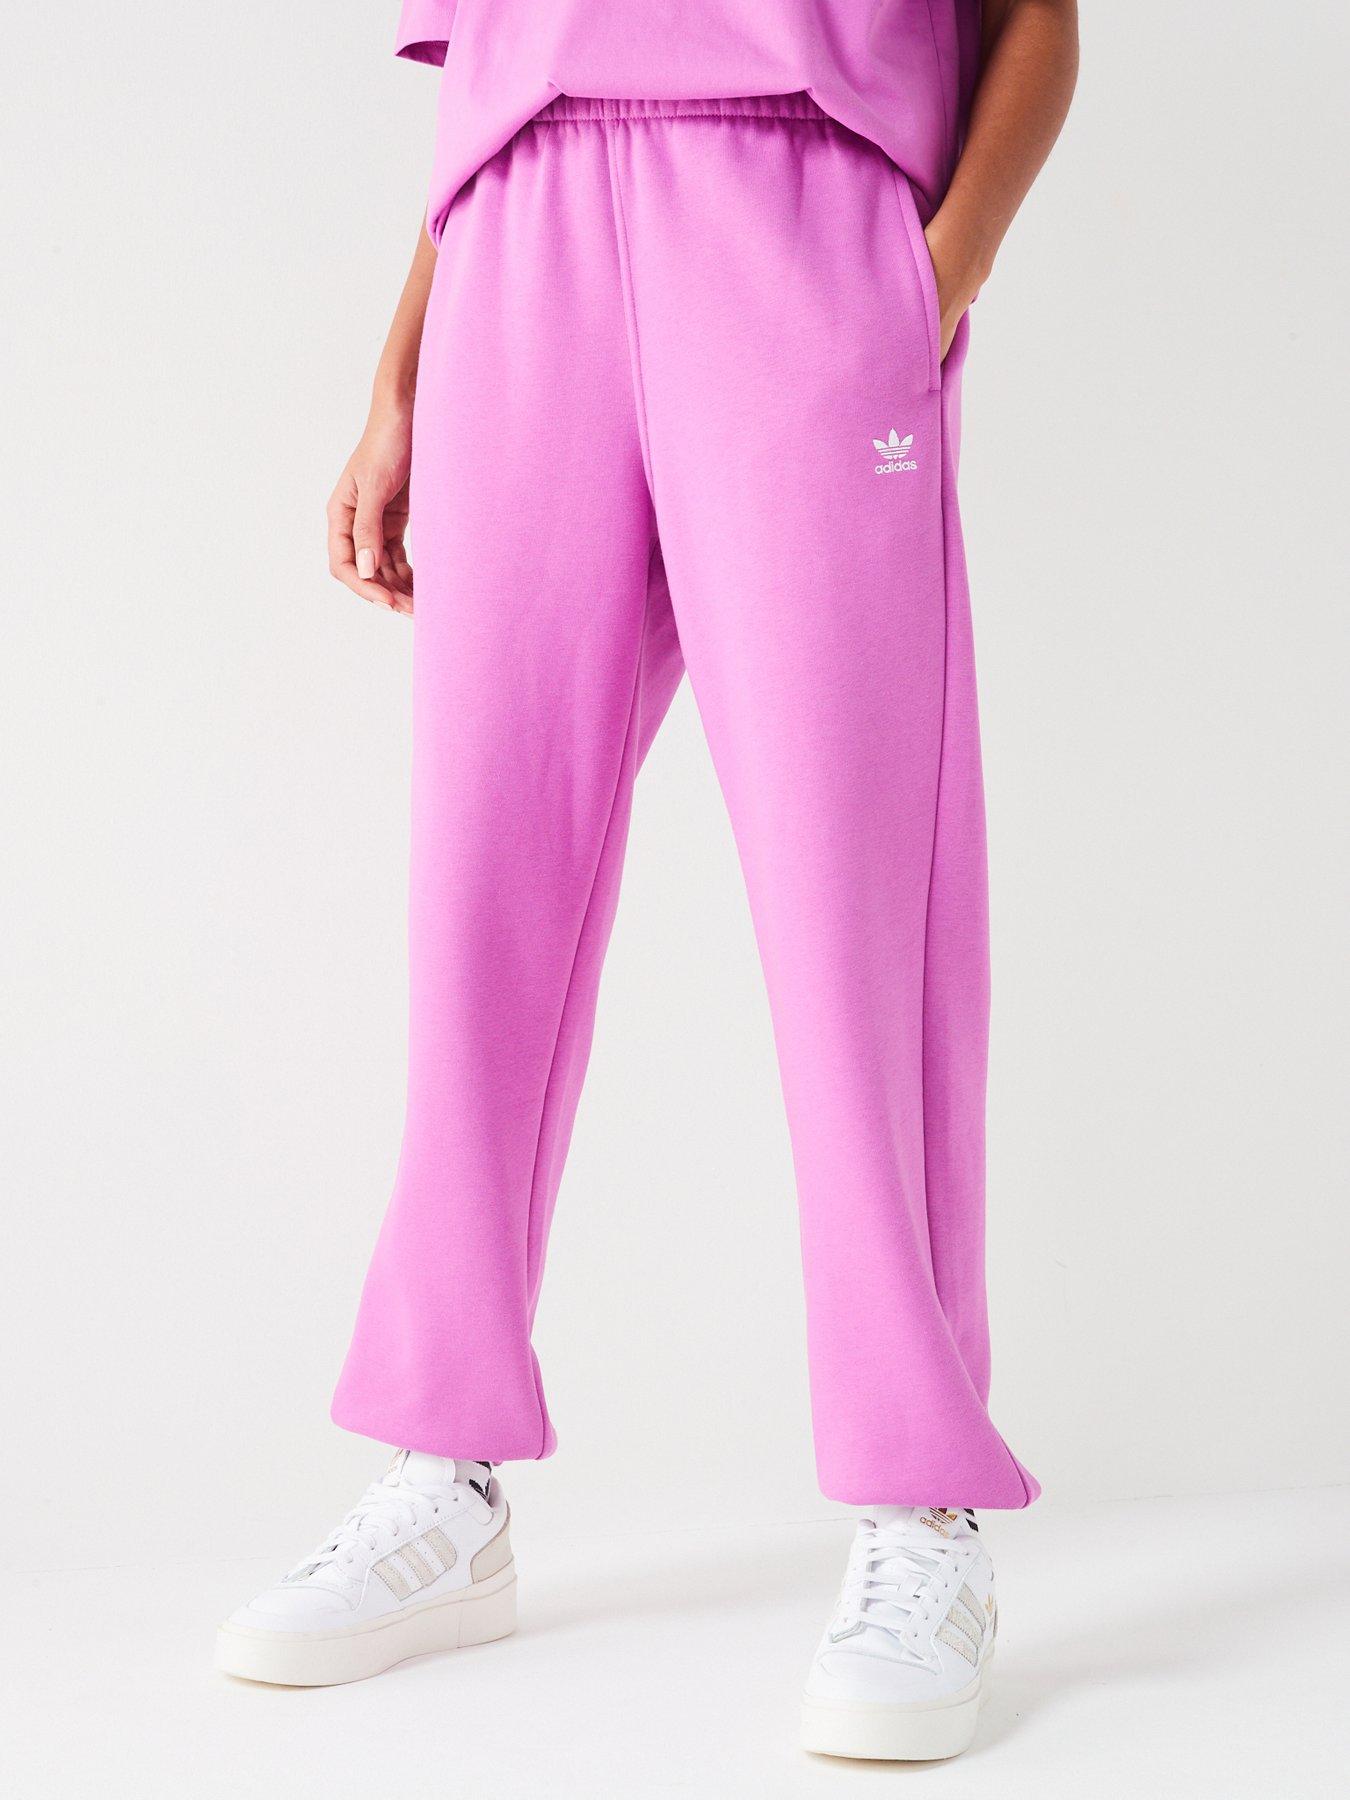 Pink Adidas Pants - Bottoms, Clothing